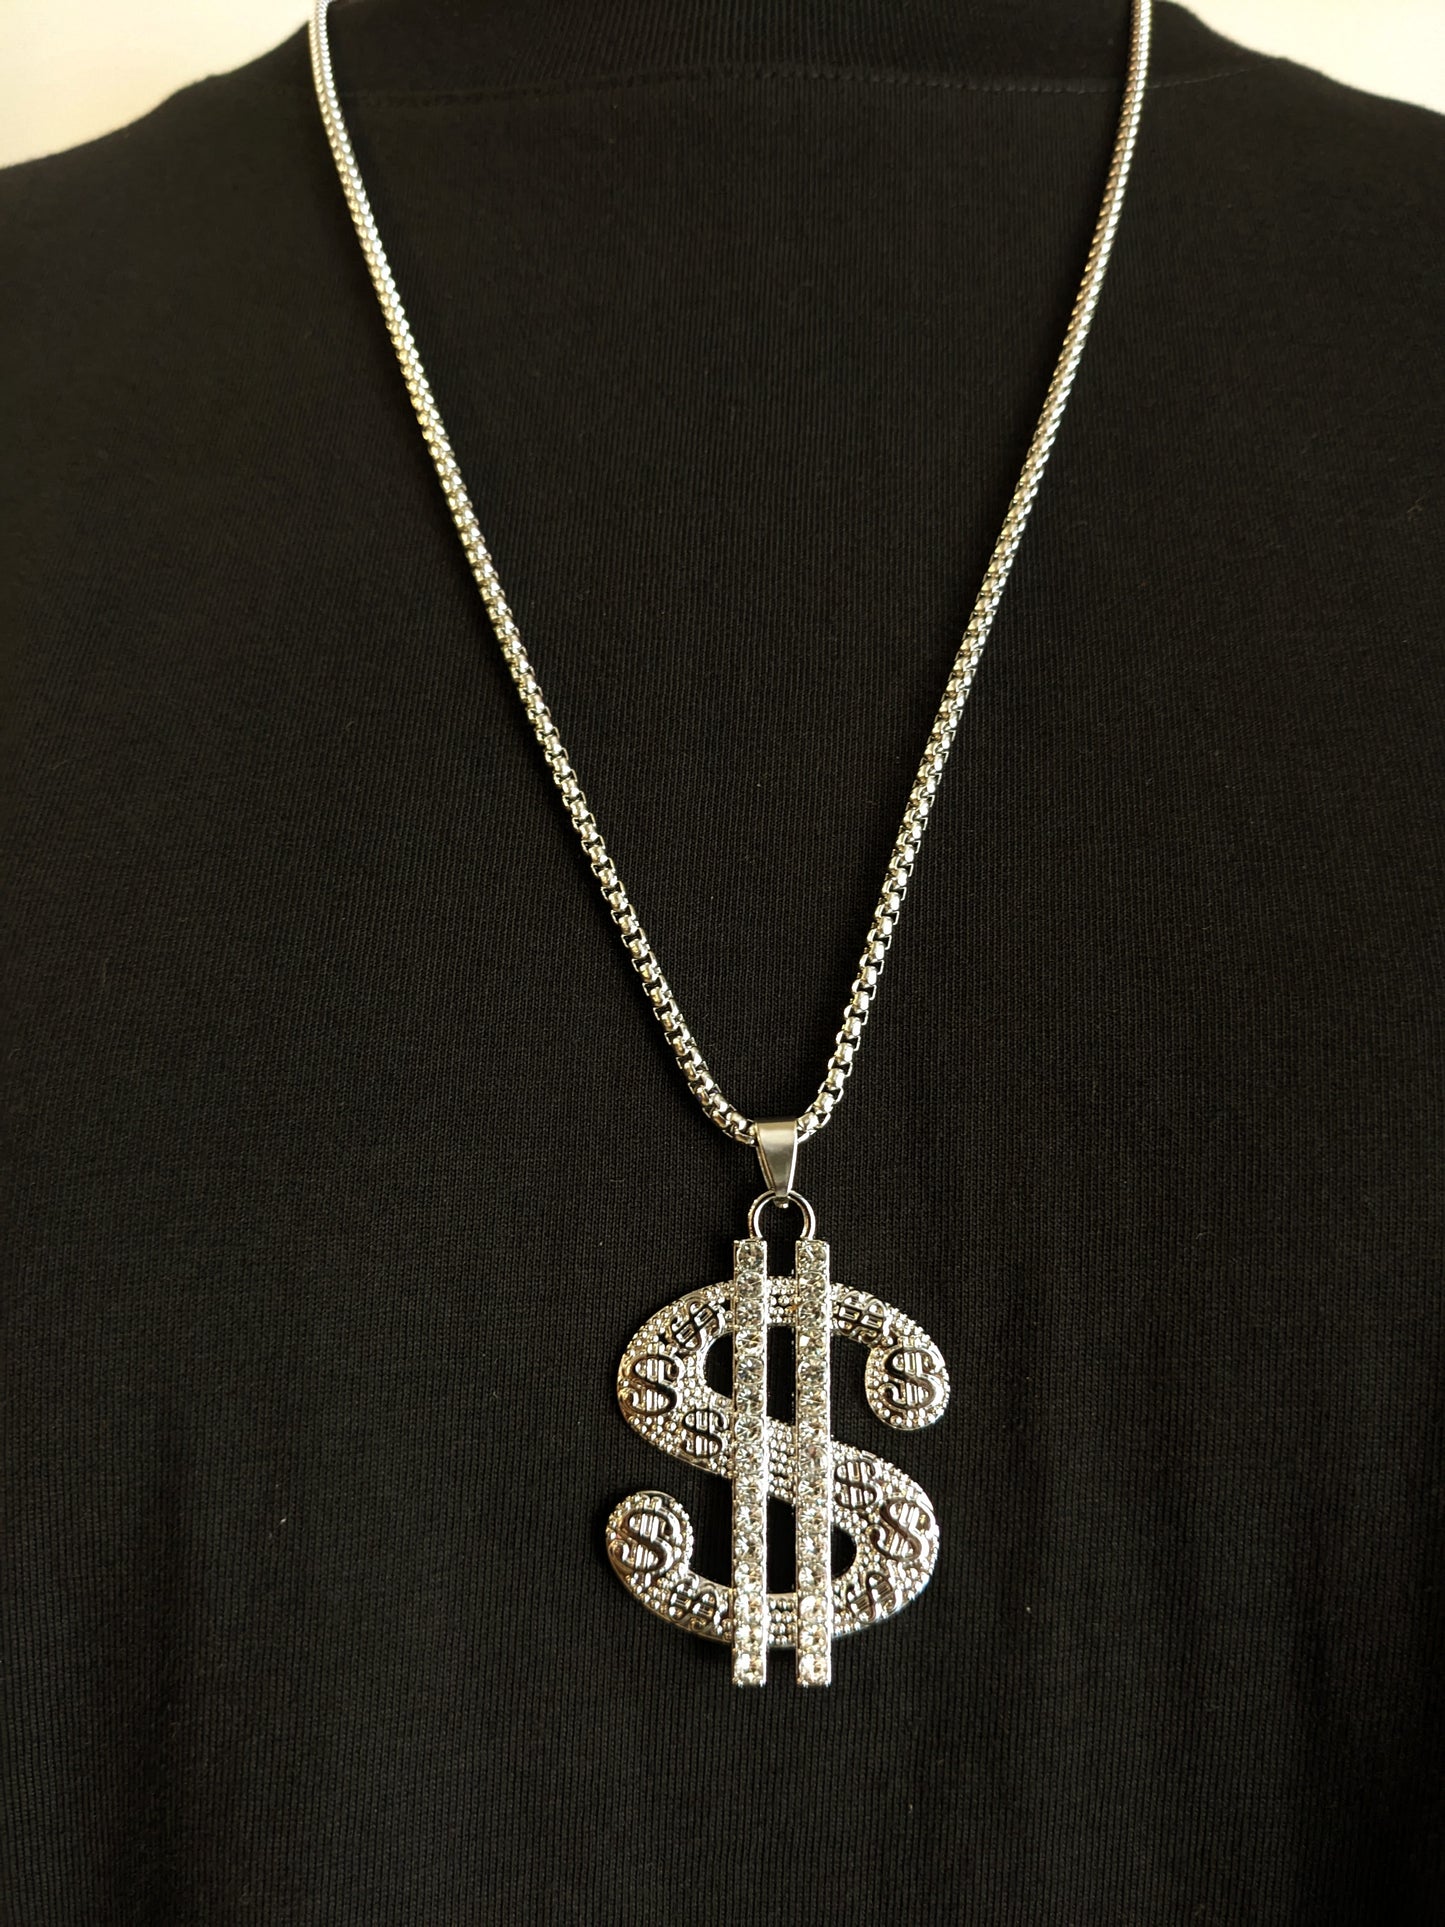 Dollar Necklace